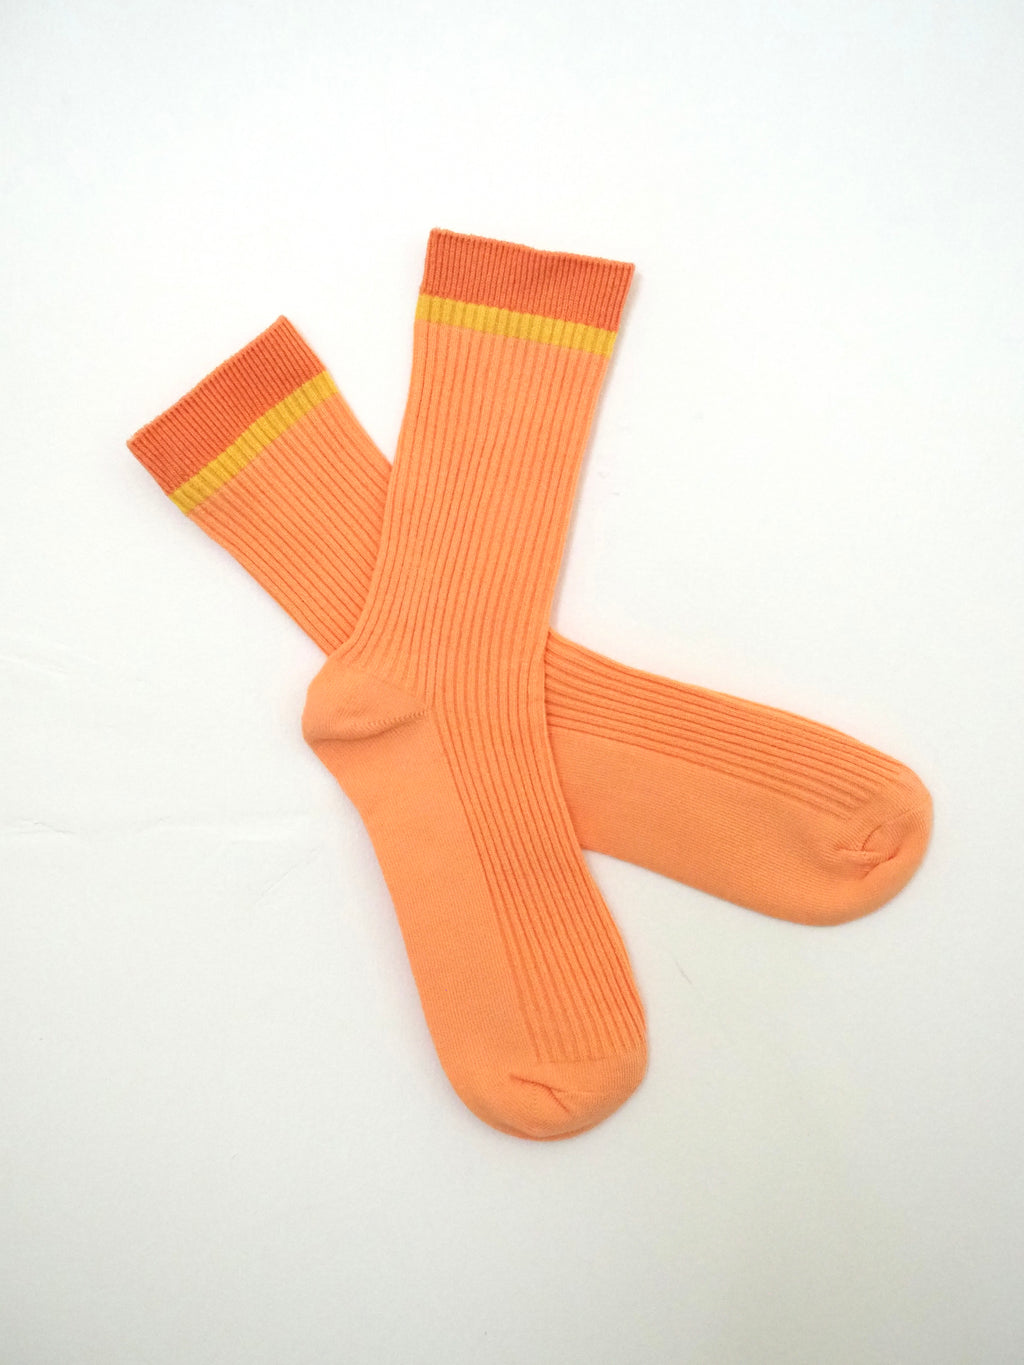 S O K K E N Picnic socks - Apricot